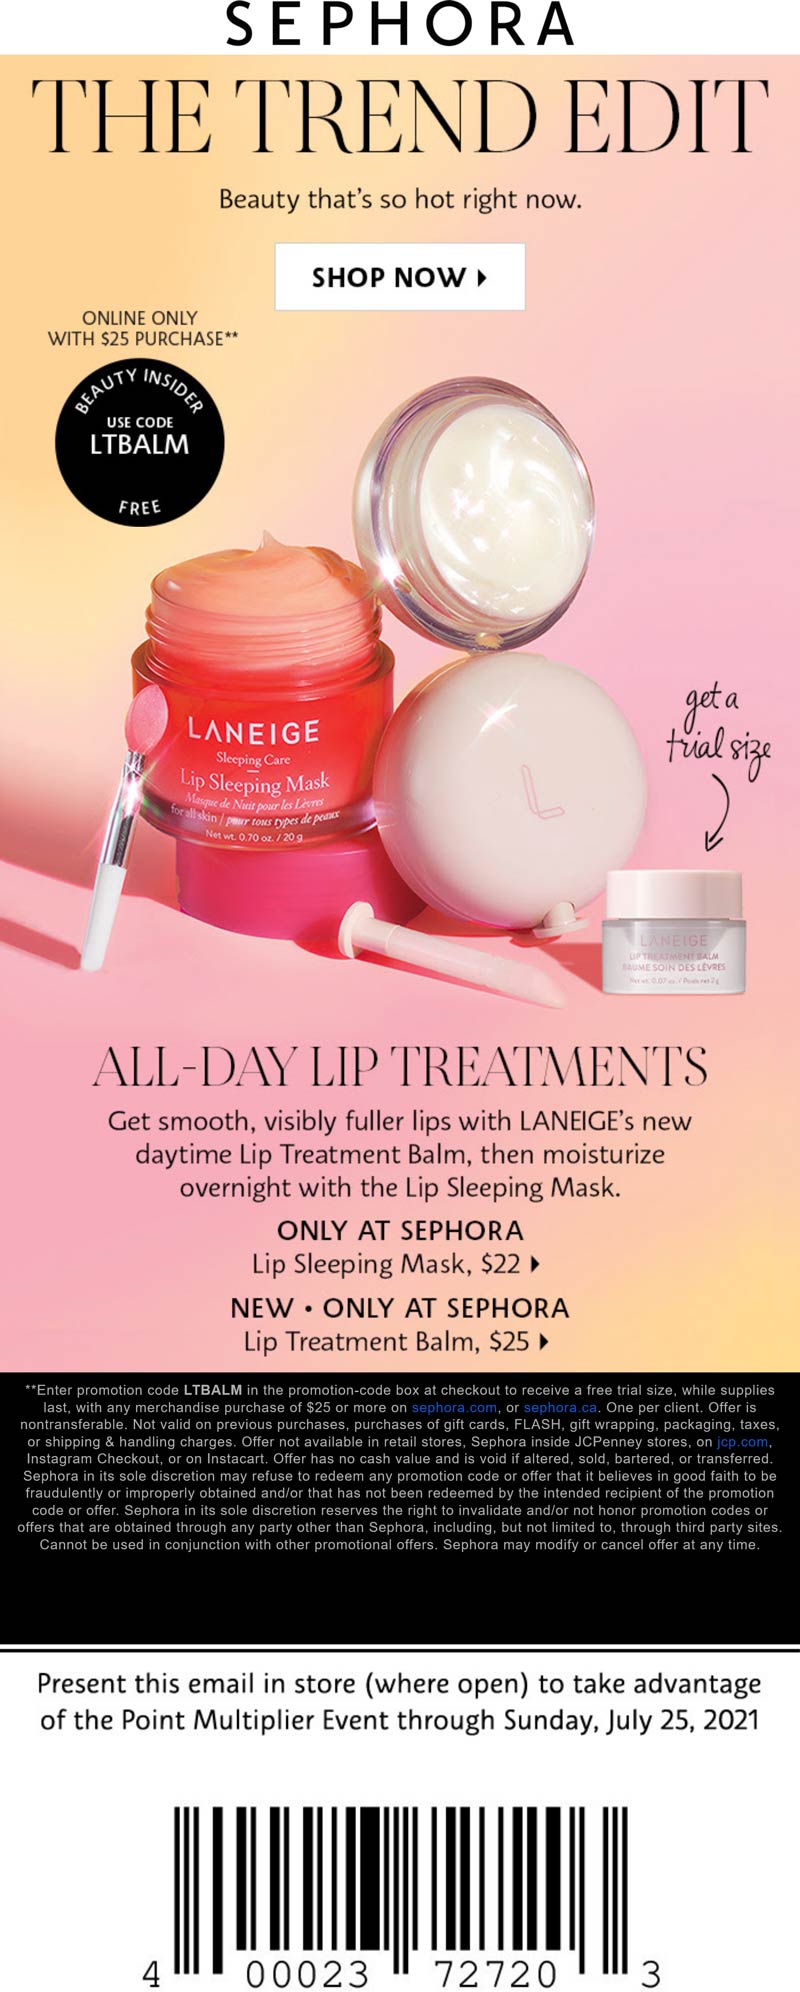 Sephora stores Coupon  Free lip balm with $25 spent online at Sephora via promo code LTBALM #sephora 